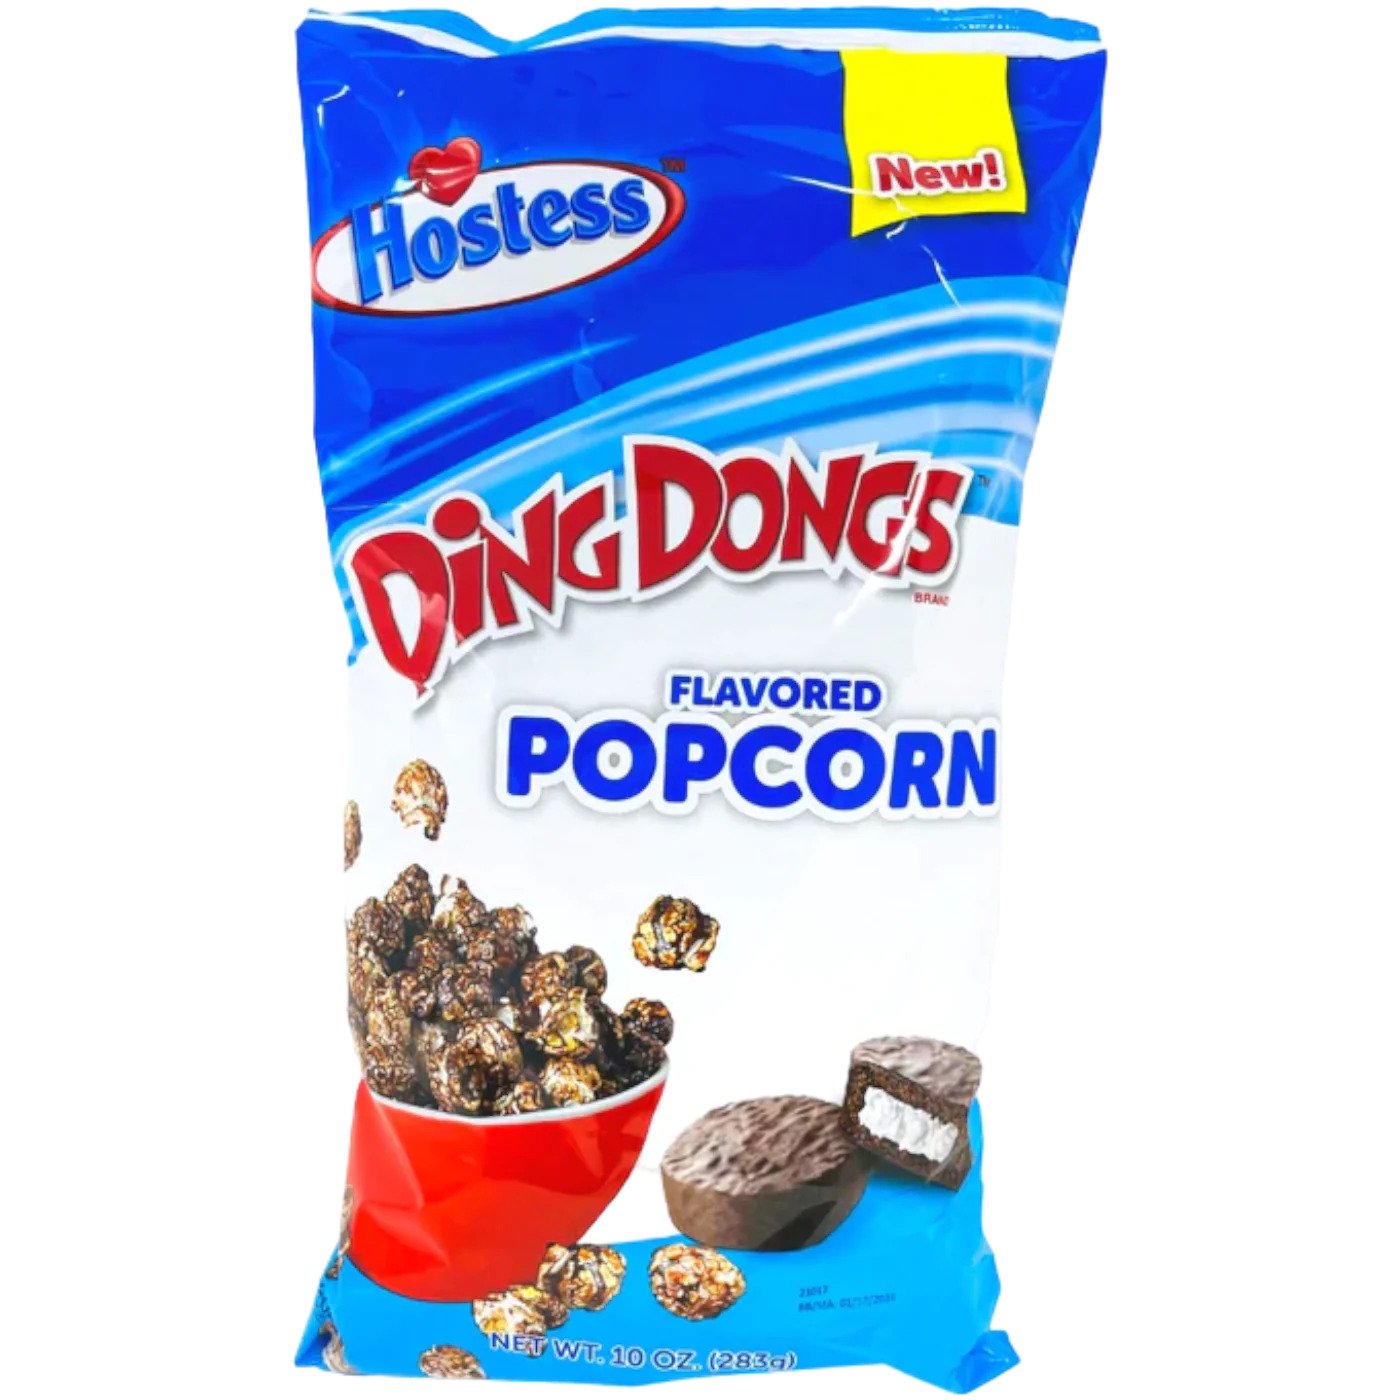 *NEW* Hostess Ding Dongs Popcorn - 10oz (283g)